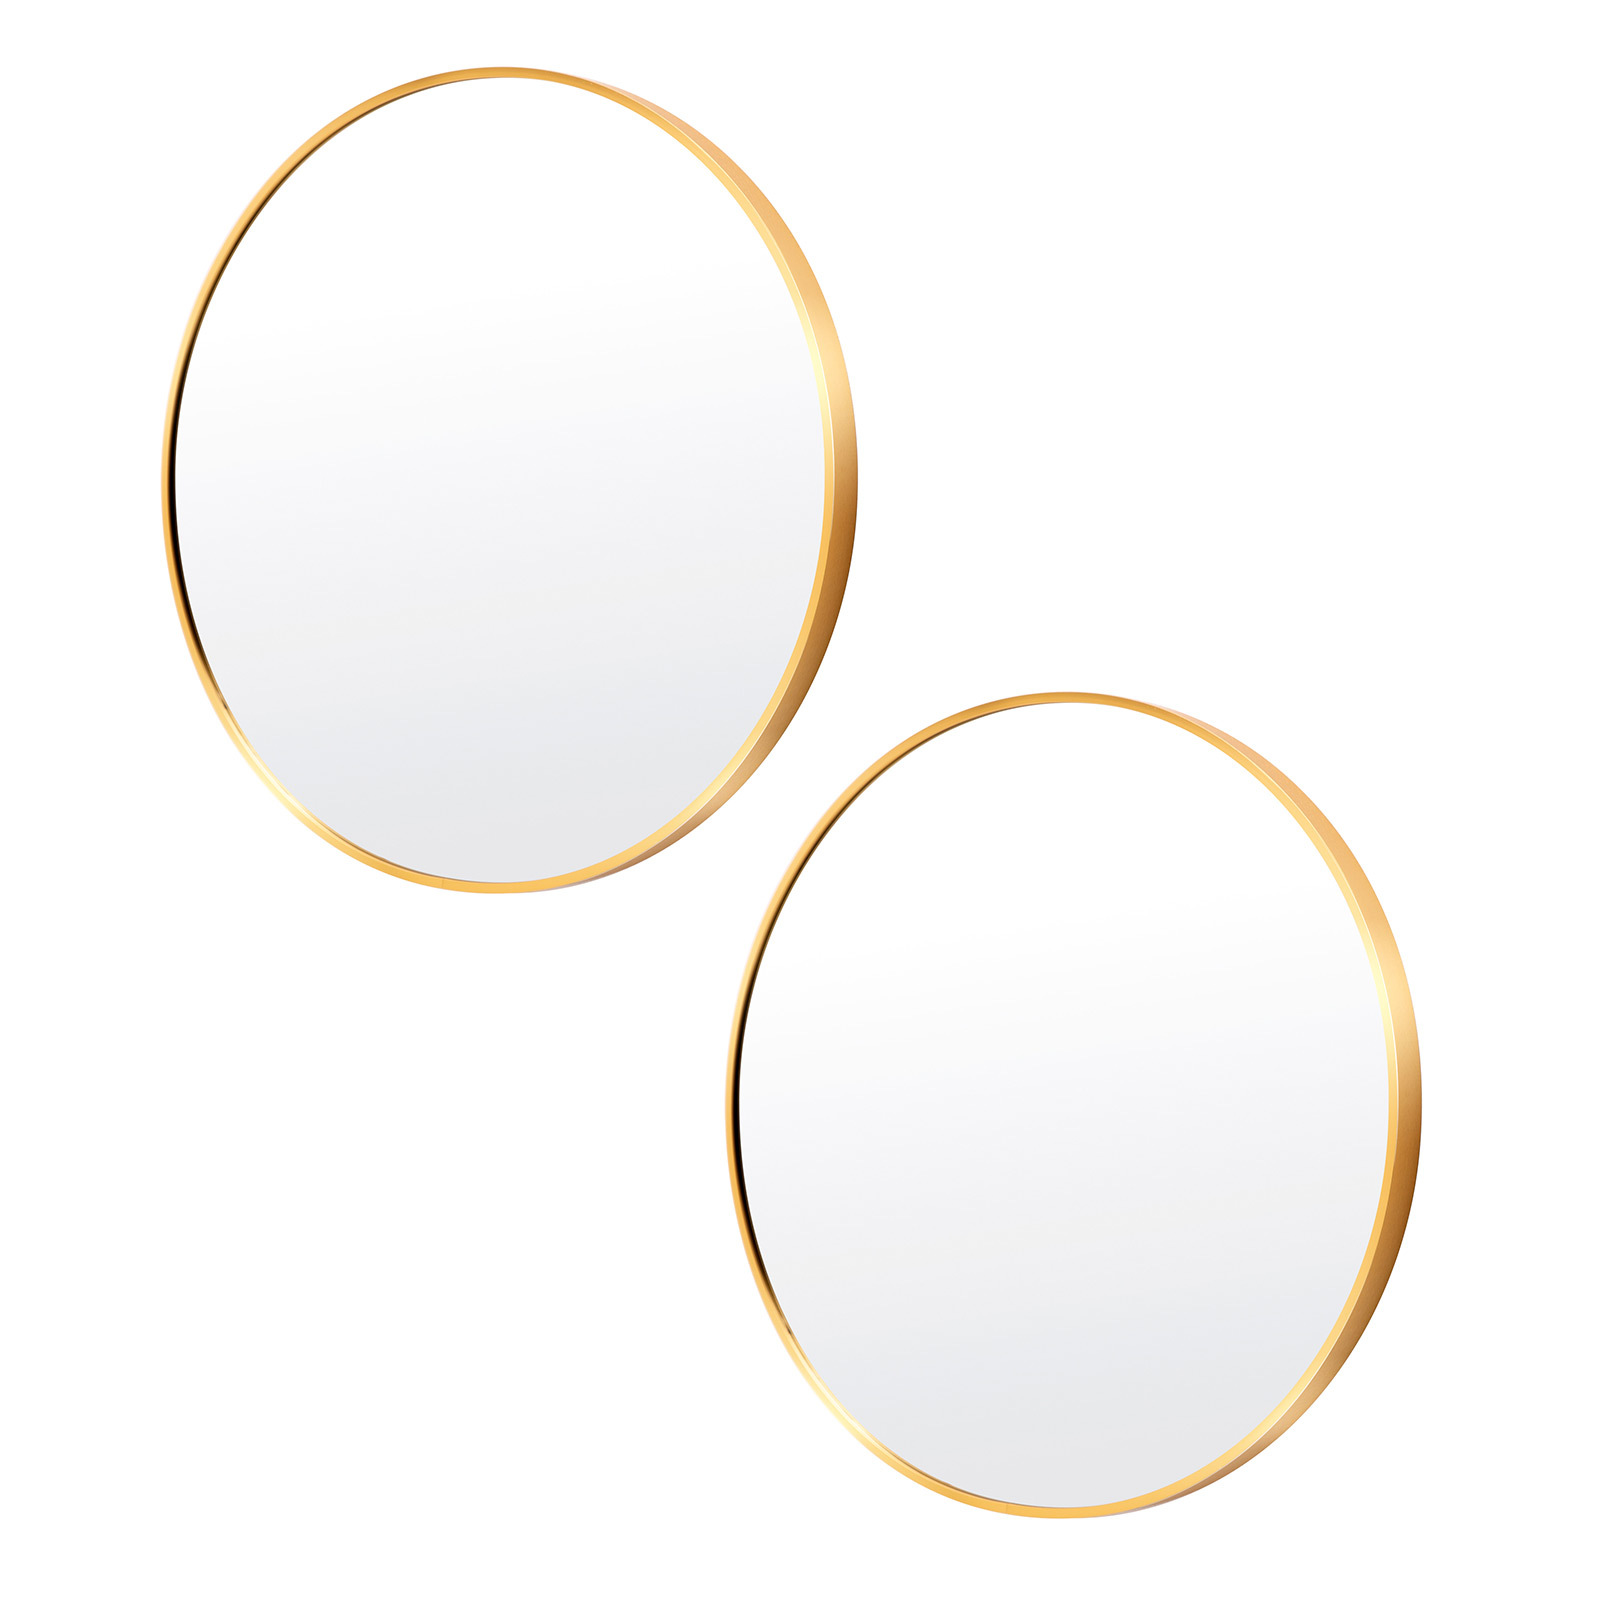 2 Set 60cm Wall Mirror Round Bathroom - GOLD